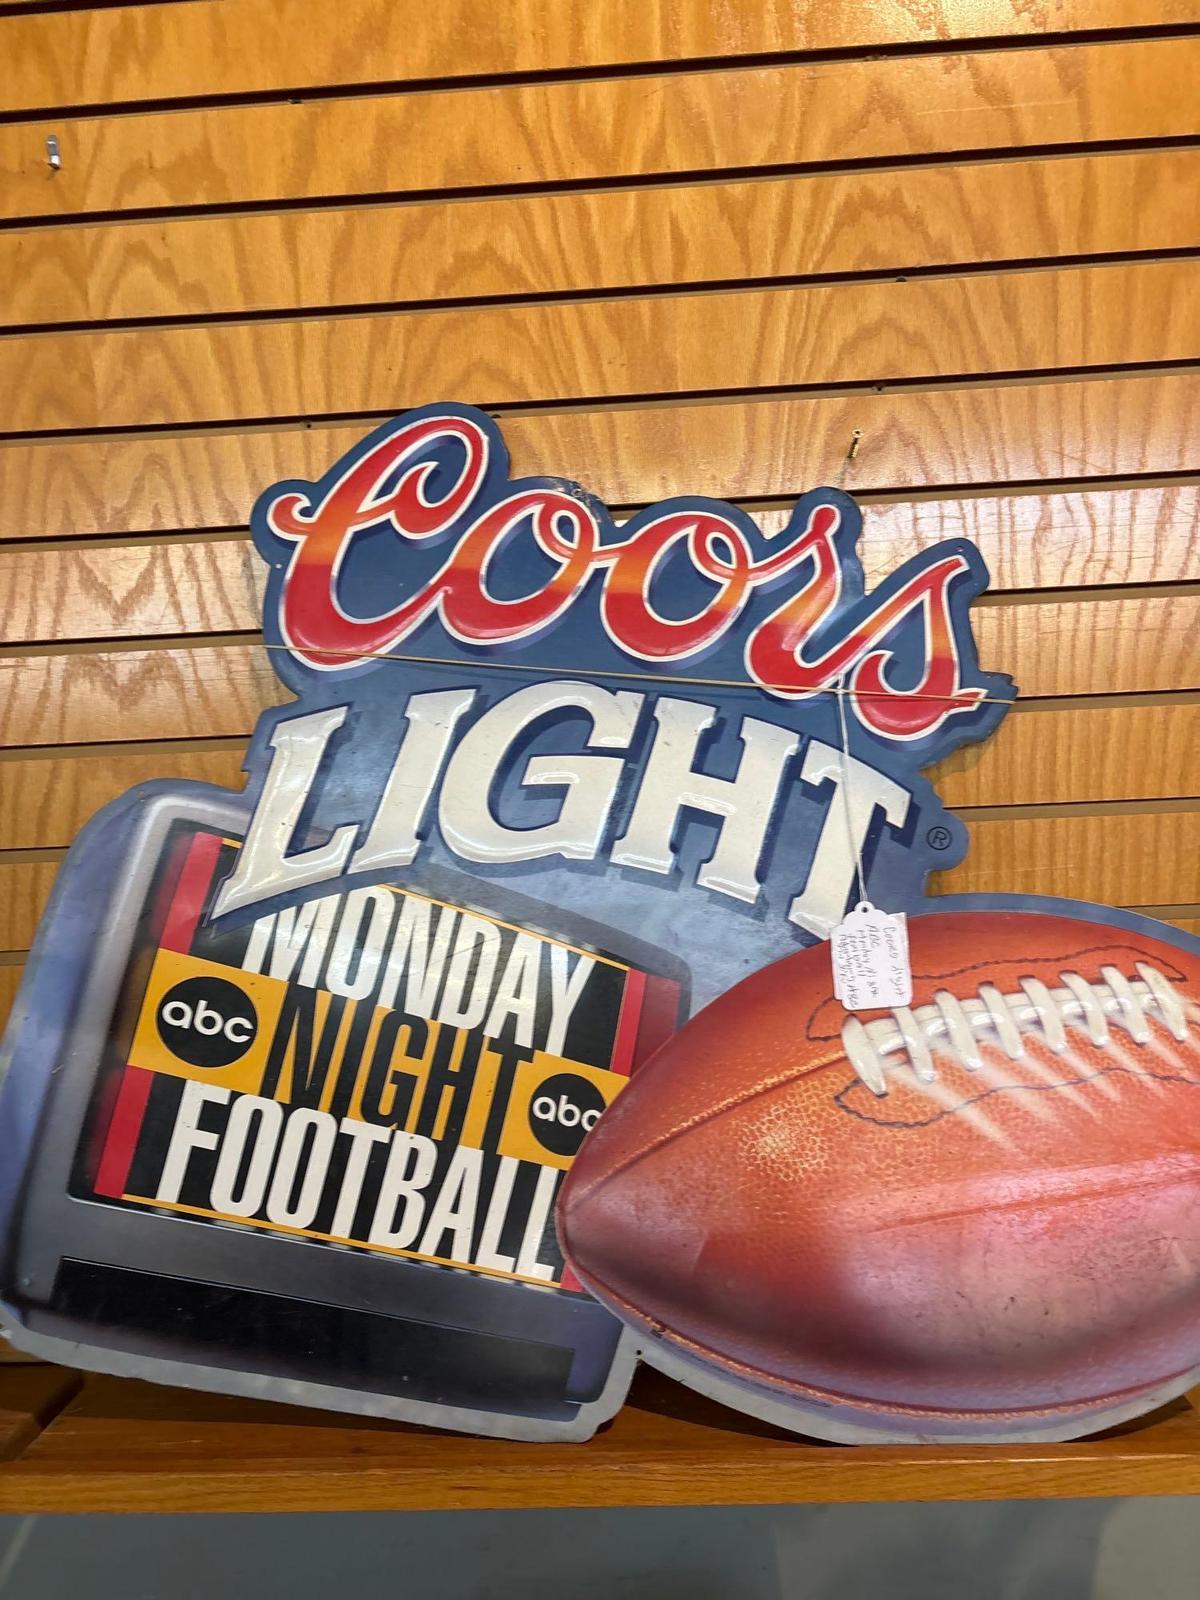 Coors light ABC Monday night football advertising tin sign